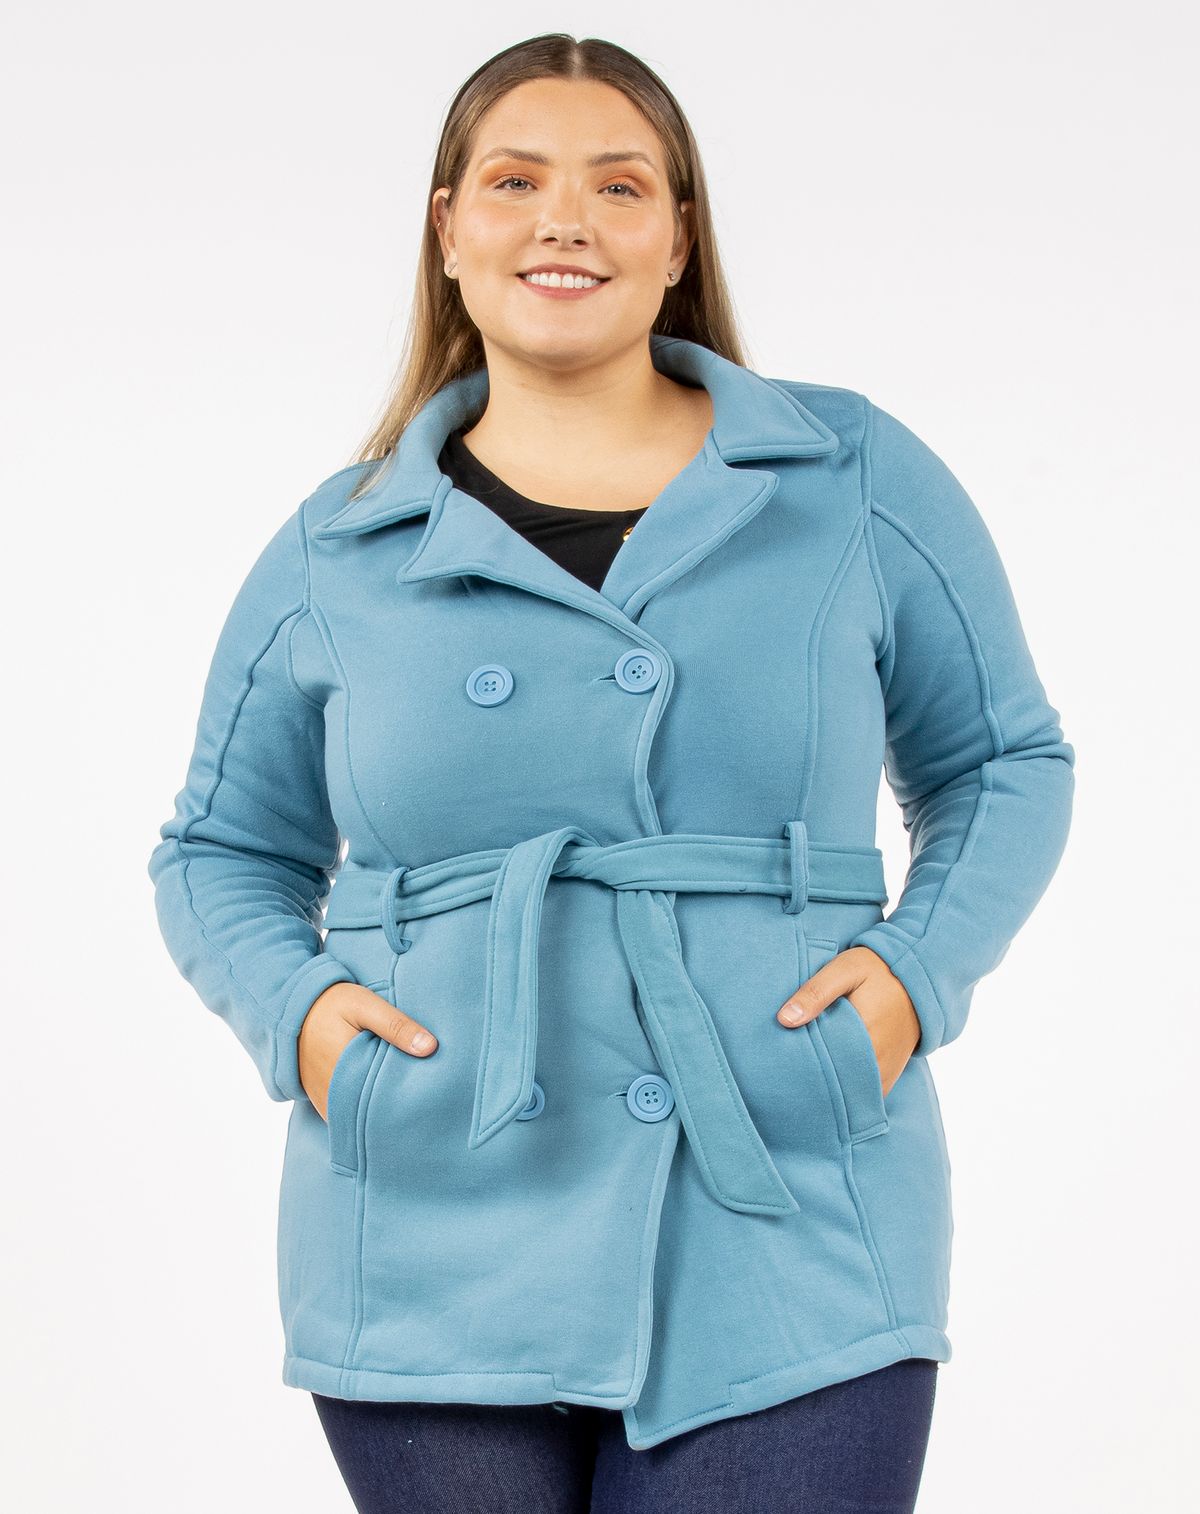 631571001-casaco-moletom-plus-size-feminino-bolsos-azul-g1-c5a